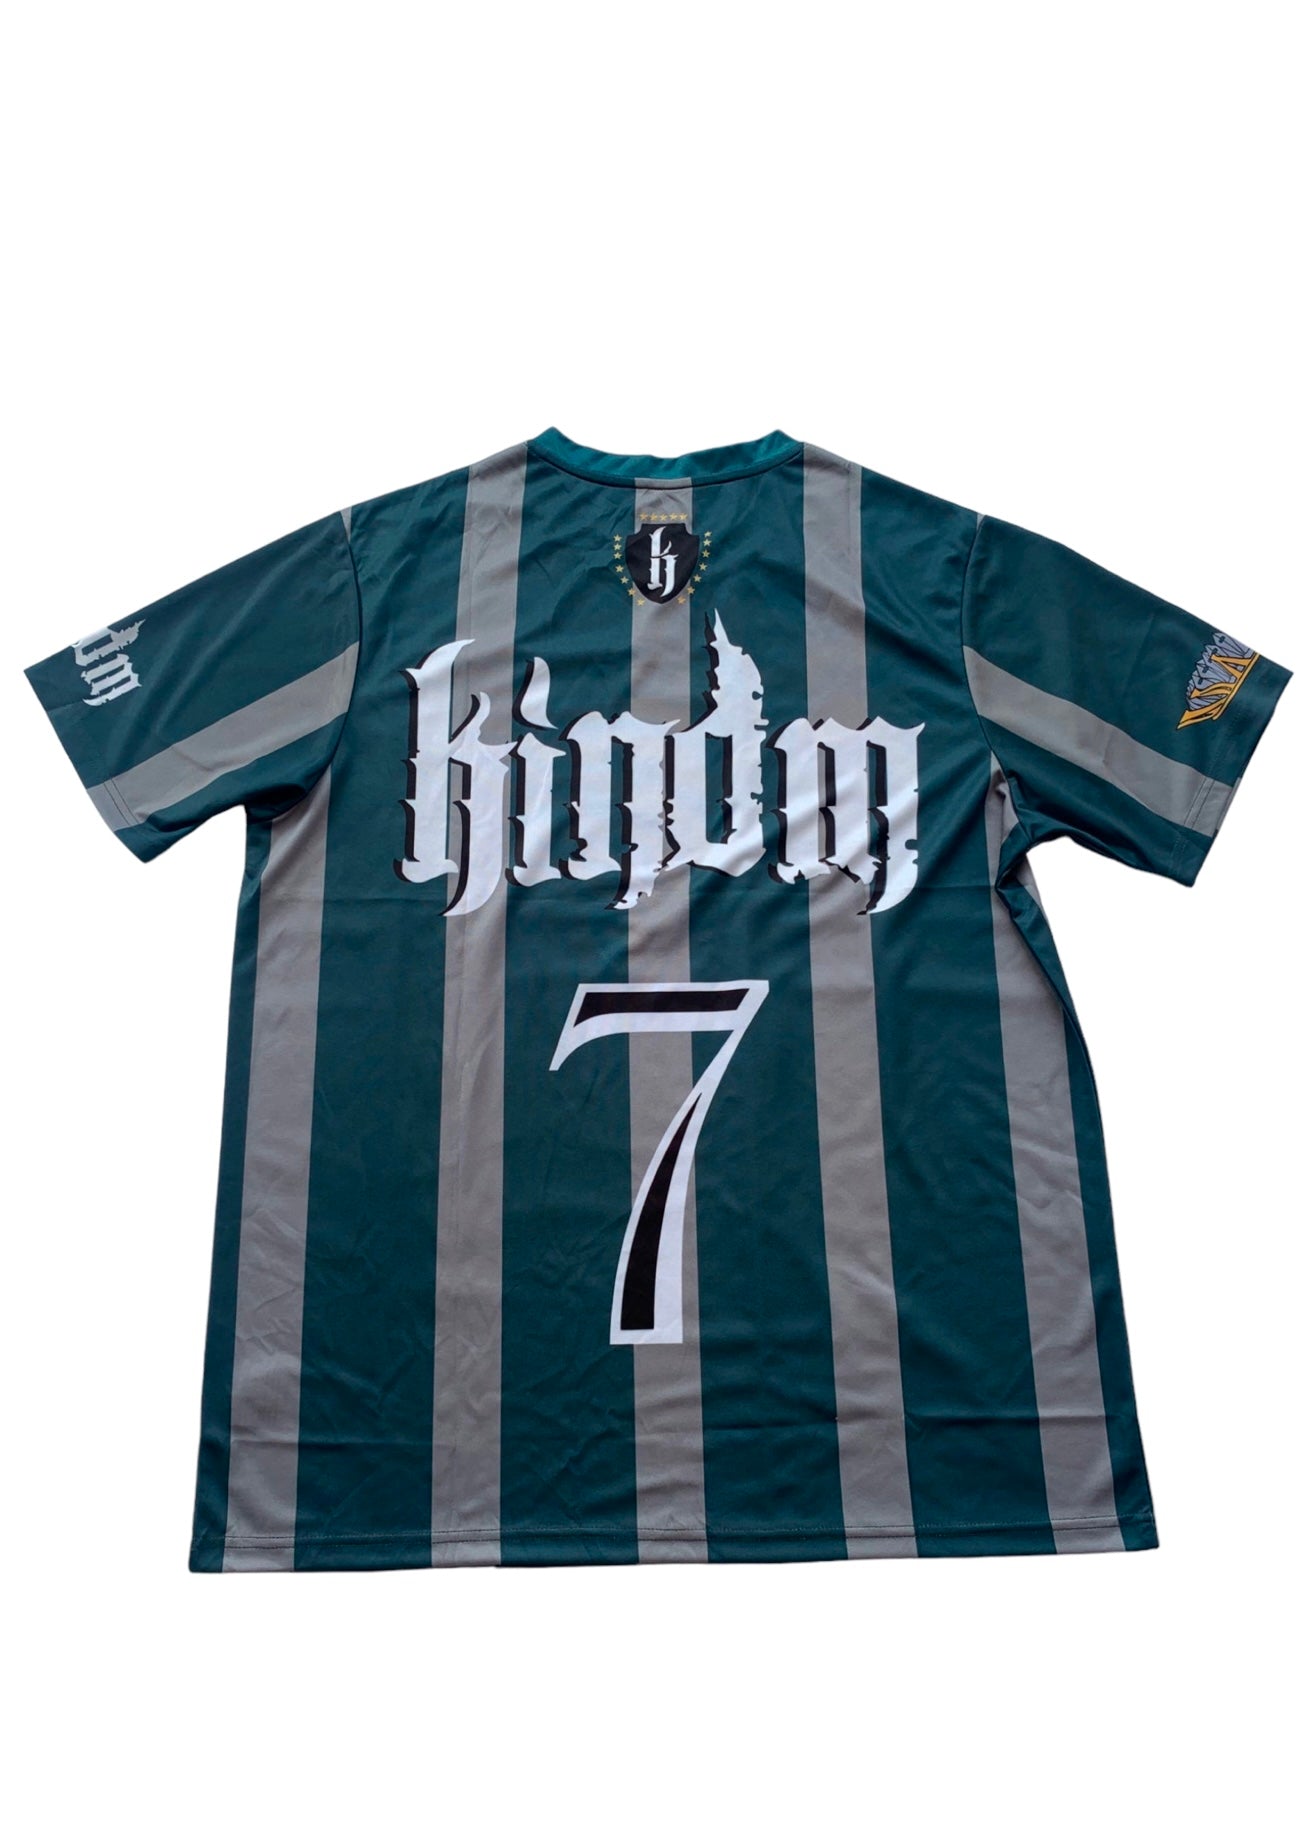 KINDM FC soccer jersey (multiple colorways)